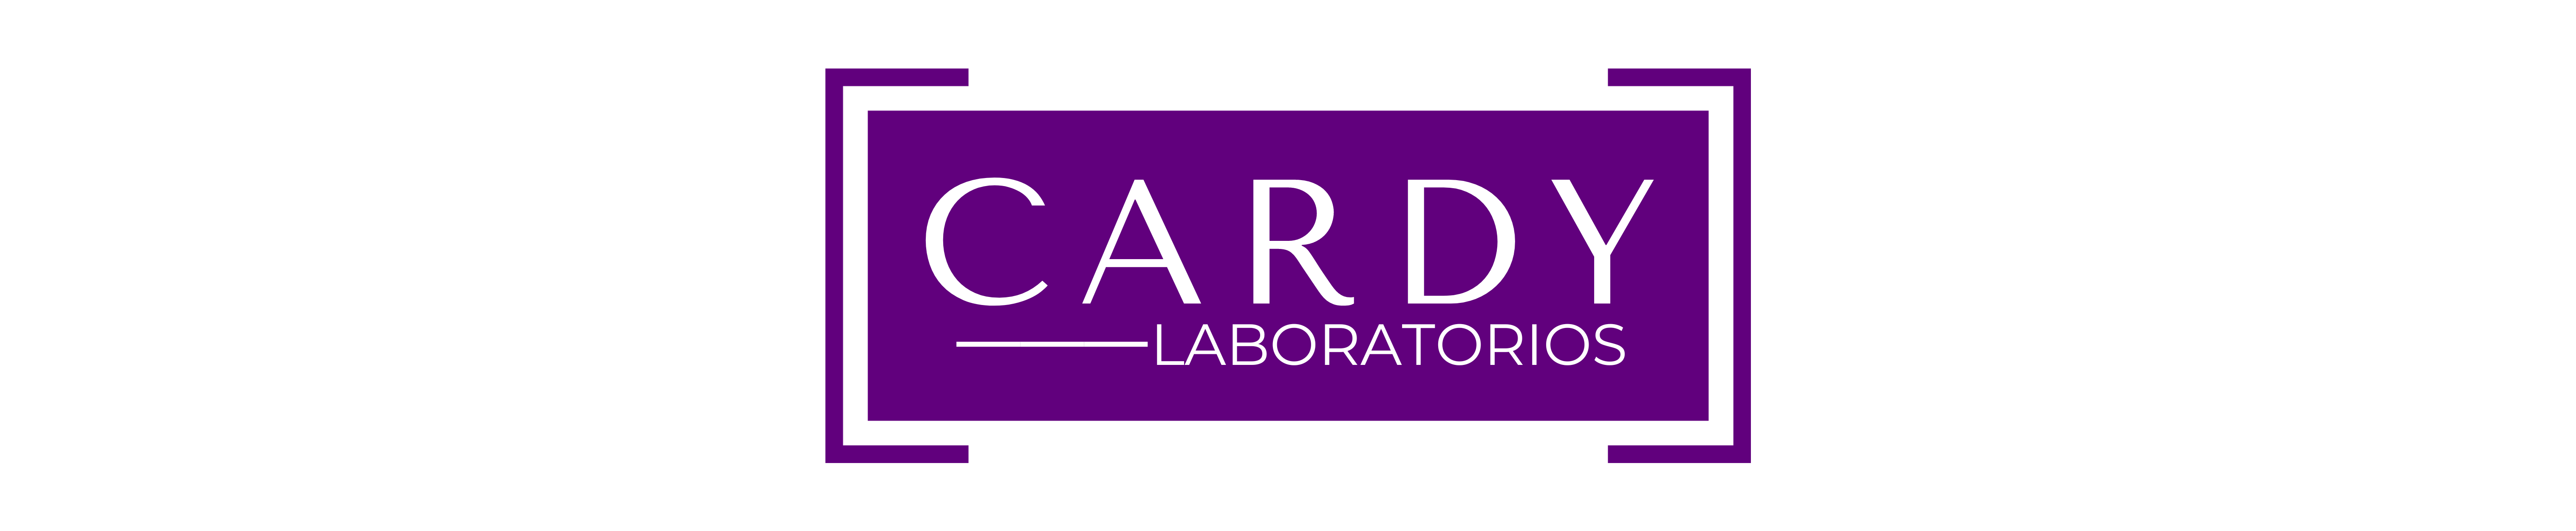 Laboratorios Cardy Cia. Ltda.